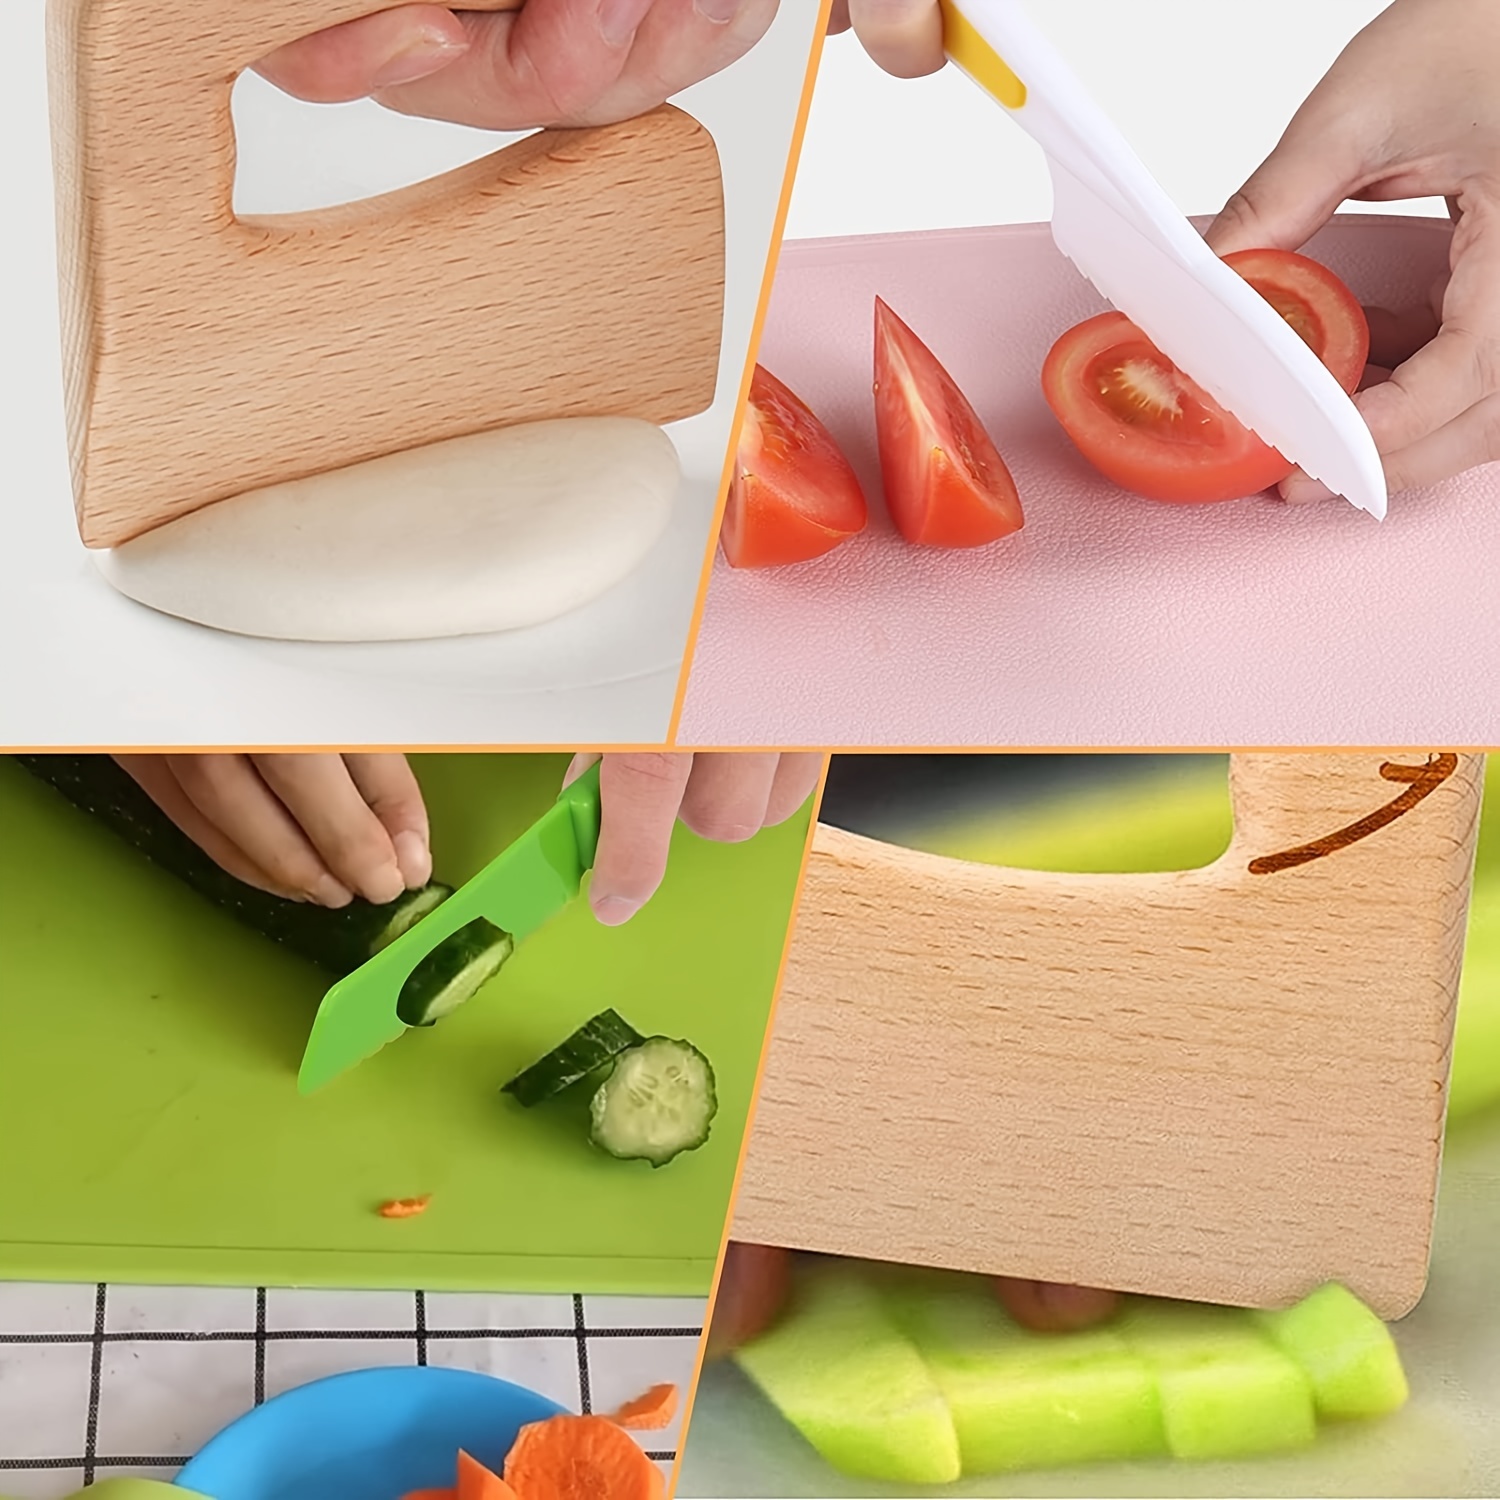 8Pcs Kids Kitchen Cutter Toy Set with 3 Plastic Cutter/Potato